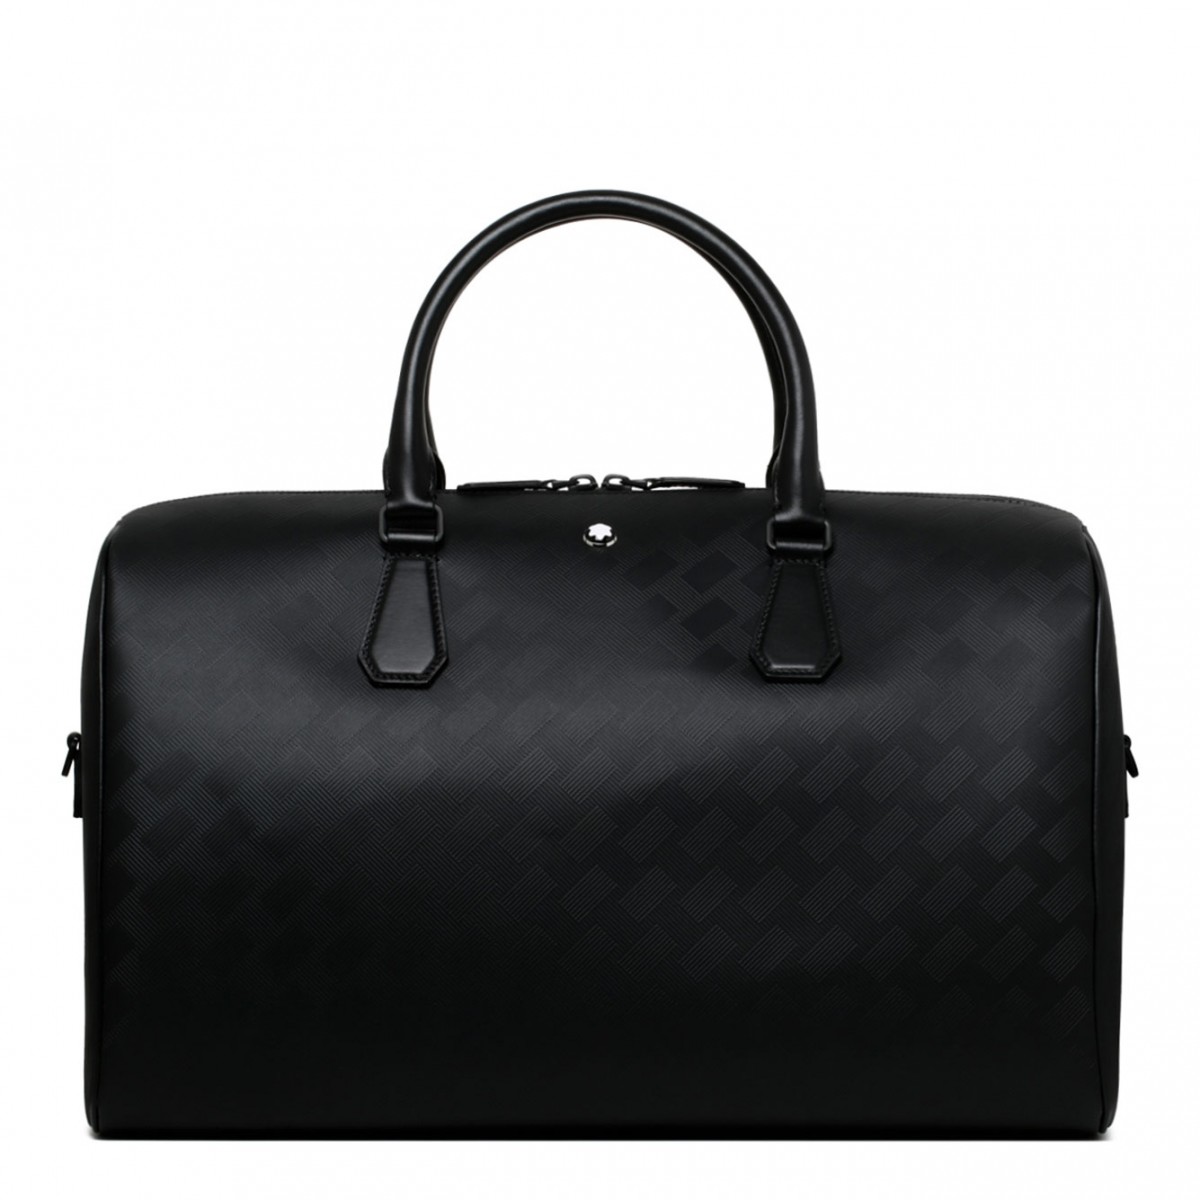 Black Large Travel Bag